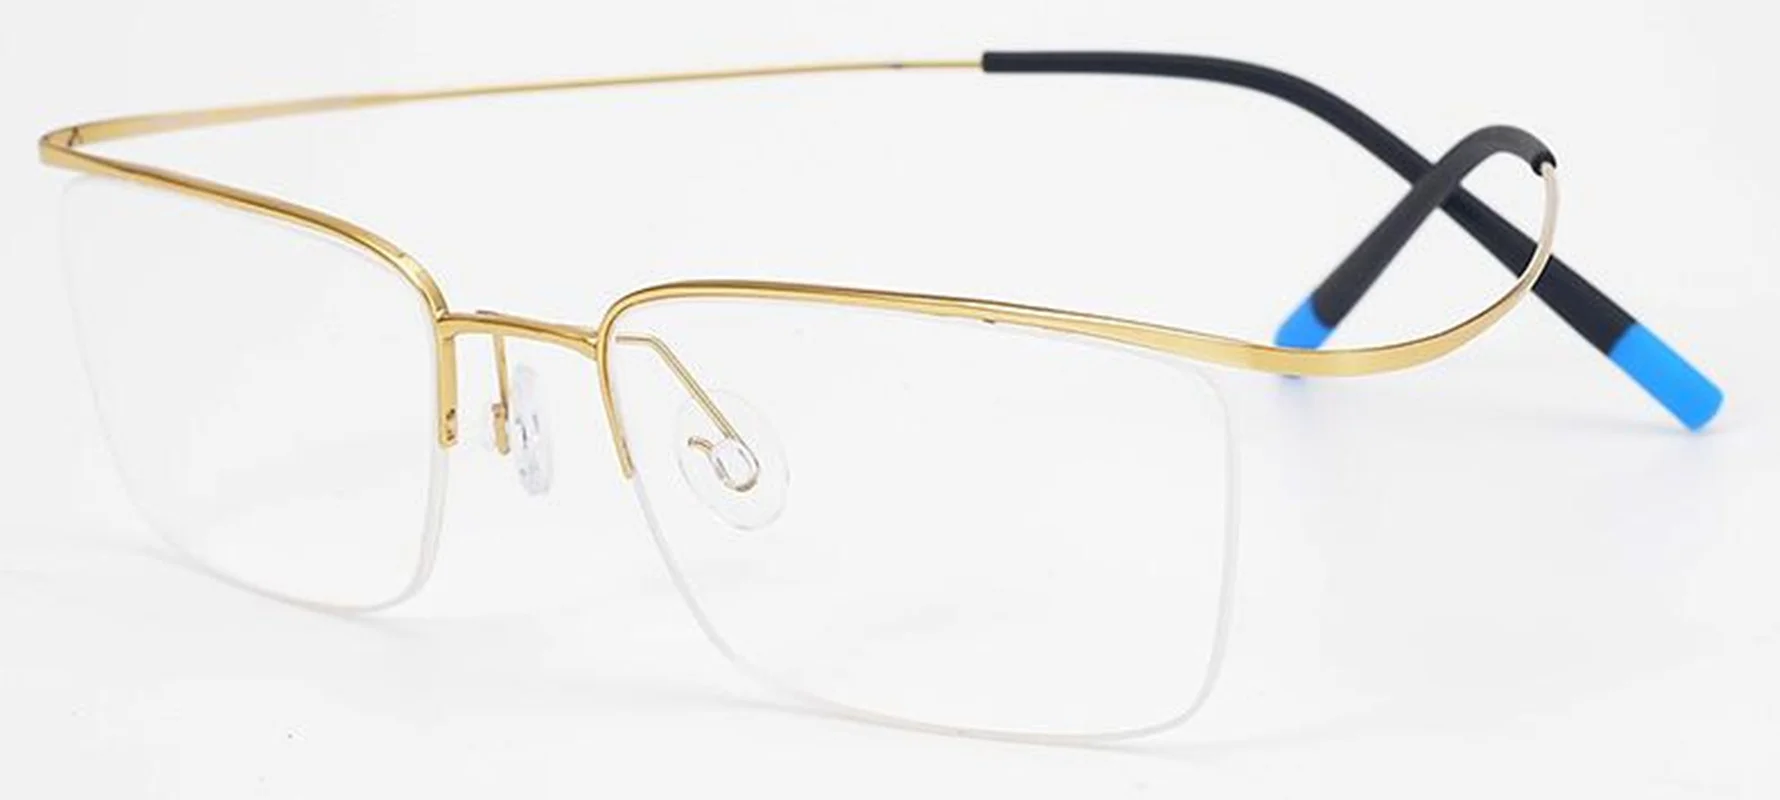 

Quality Men Pure-Titanium Halfrim Eyeglasses Frame 53-18-145 Lightweight for Prescription Concise Eyebrow Design